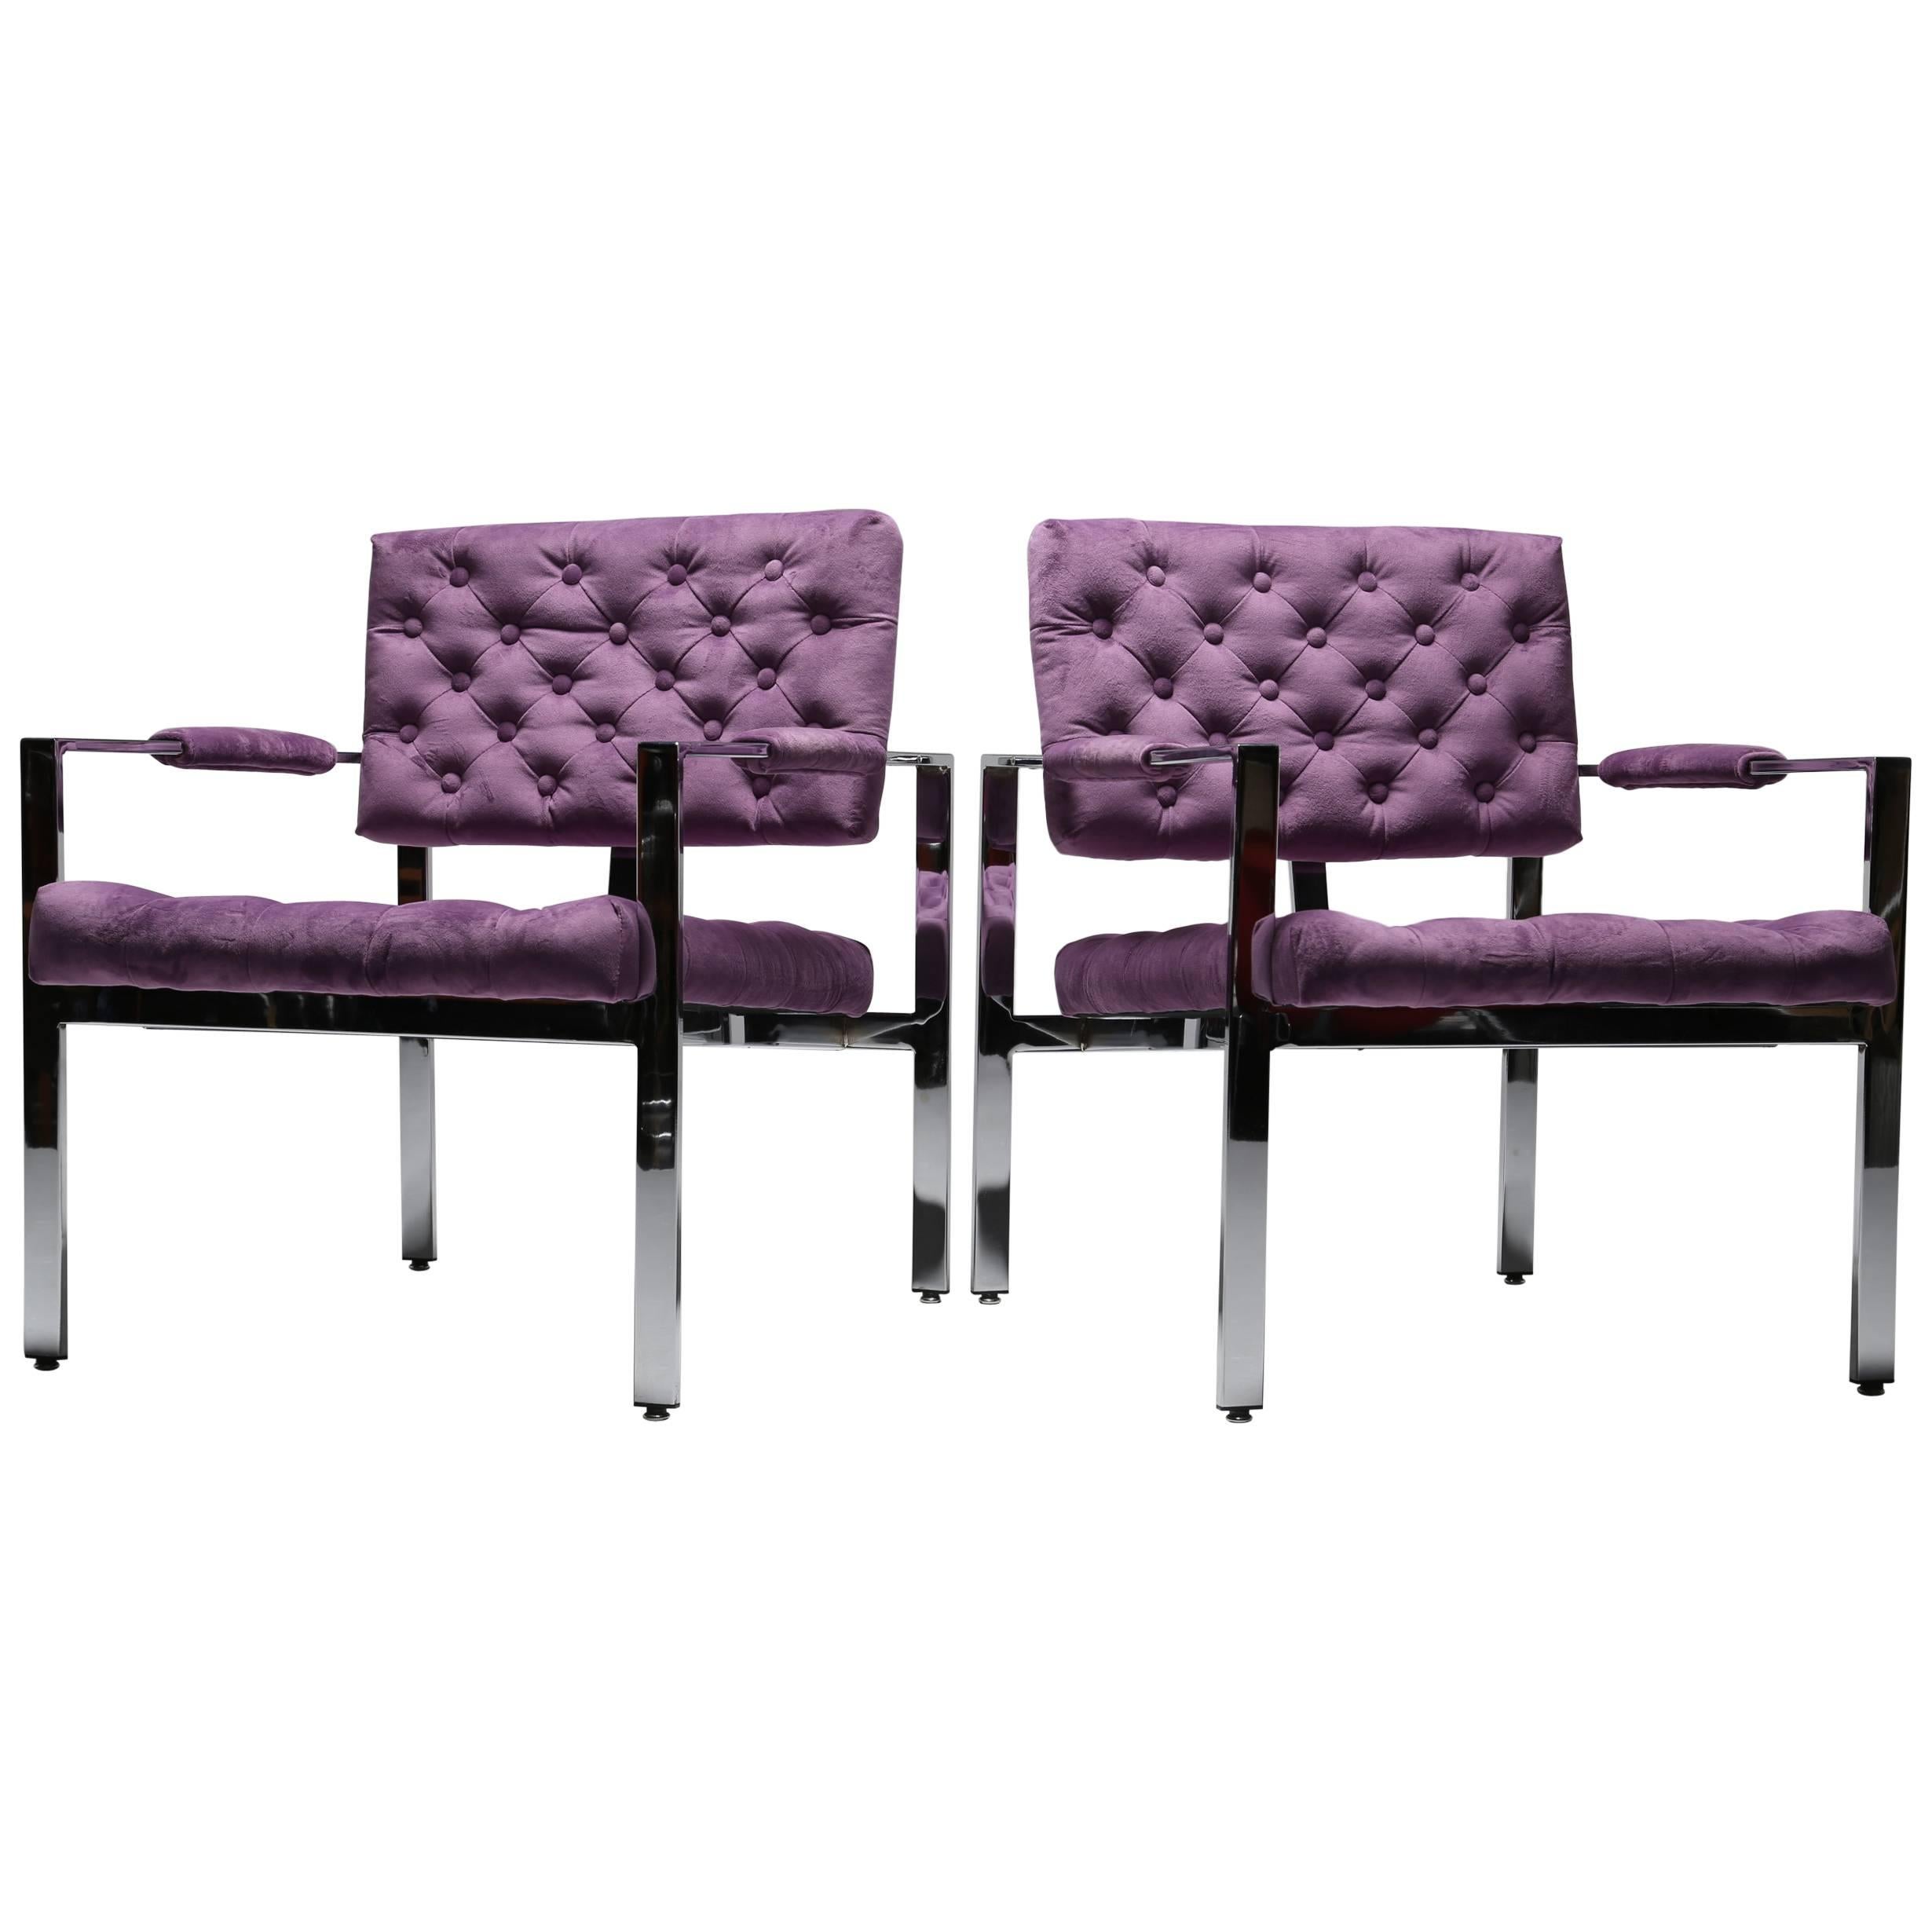 Milo Baughman chrome frame lounge chairs, Thayer Coggin. For Sale